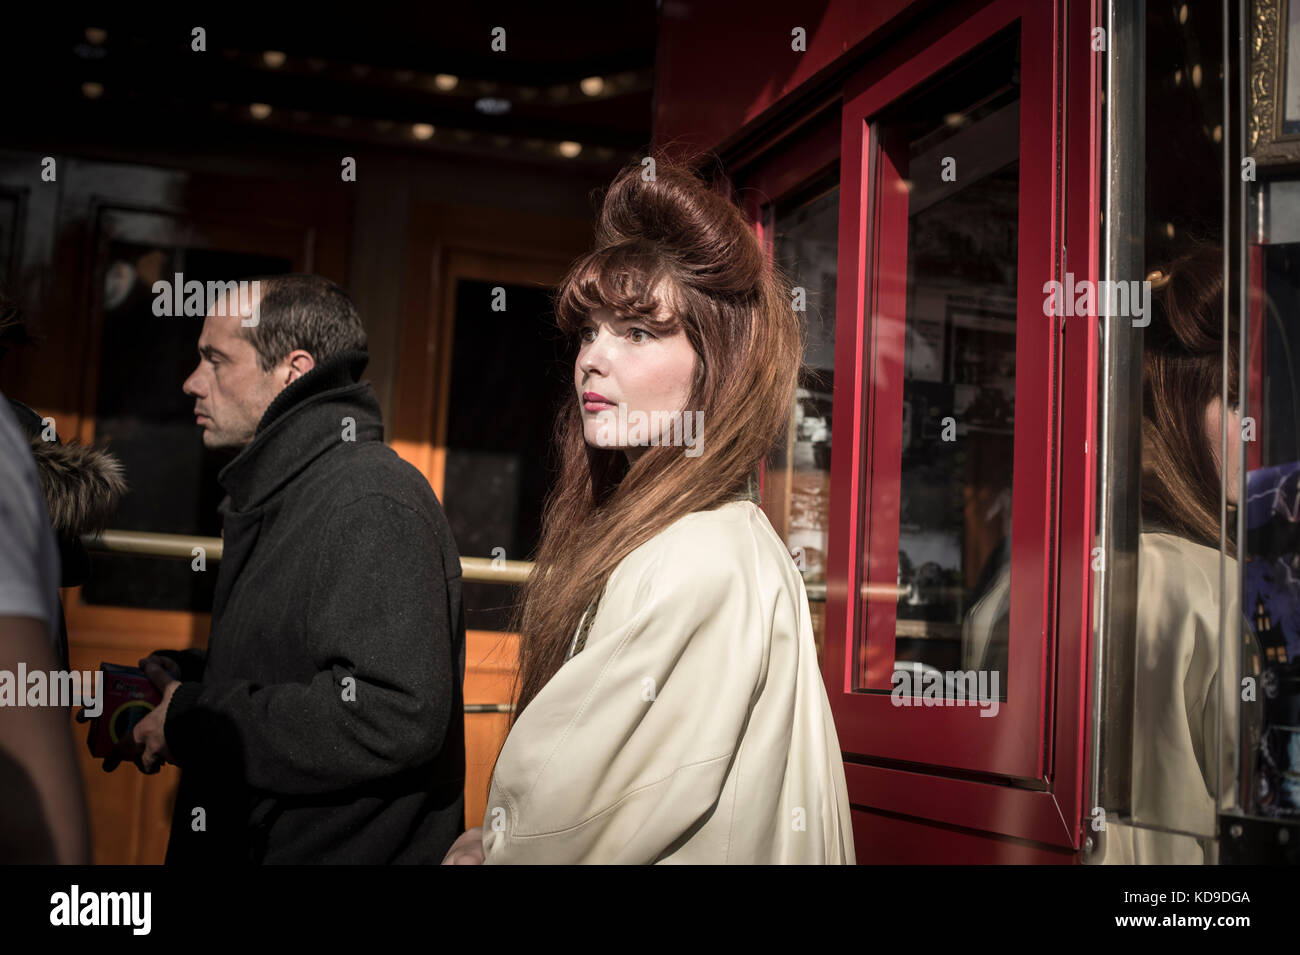 Parigi, le 2 ottobre 2015, une jeune fille assistere dans la queue d'un manège à la fête à Neuneu. Parigi, 2 ottobre 2015 , una giovane ragazza che aspetta nel ta Foto Stock